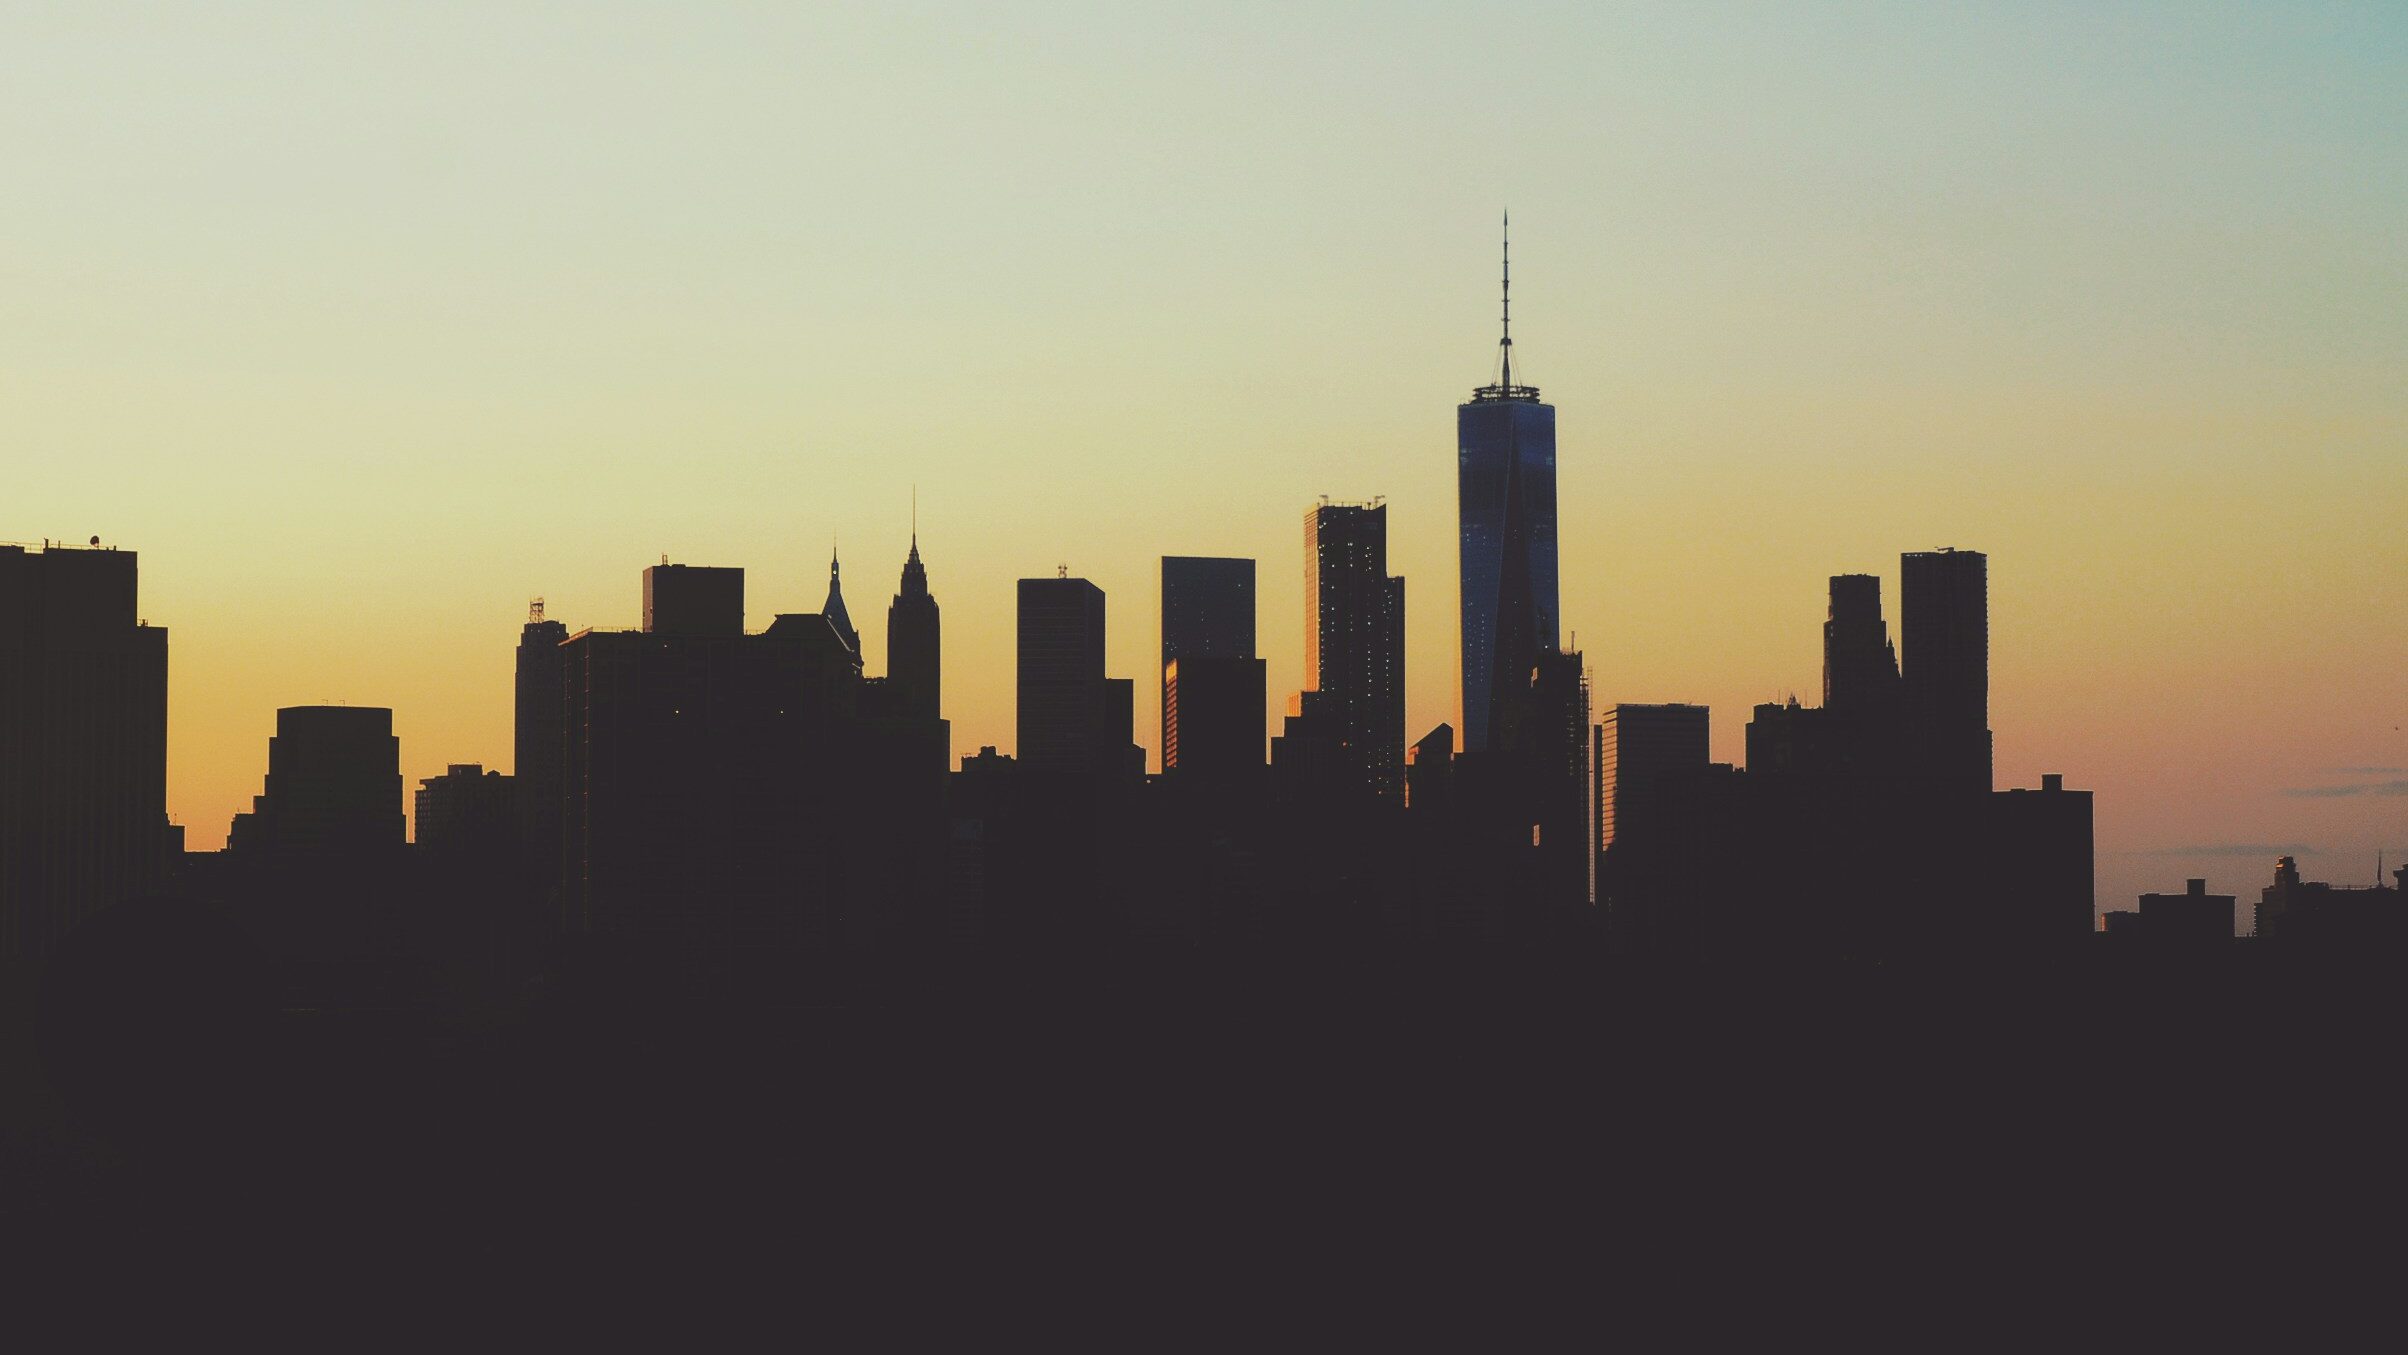 Silhouette of a city skyline